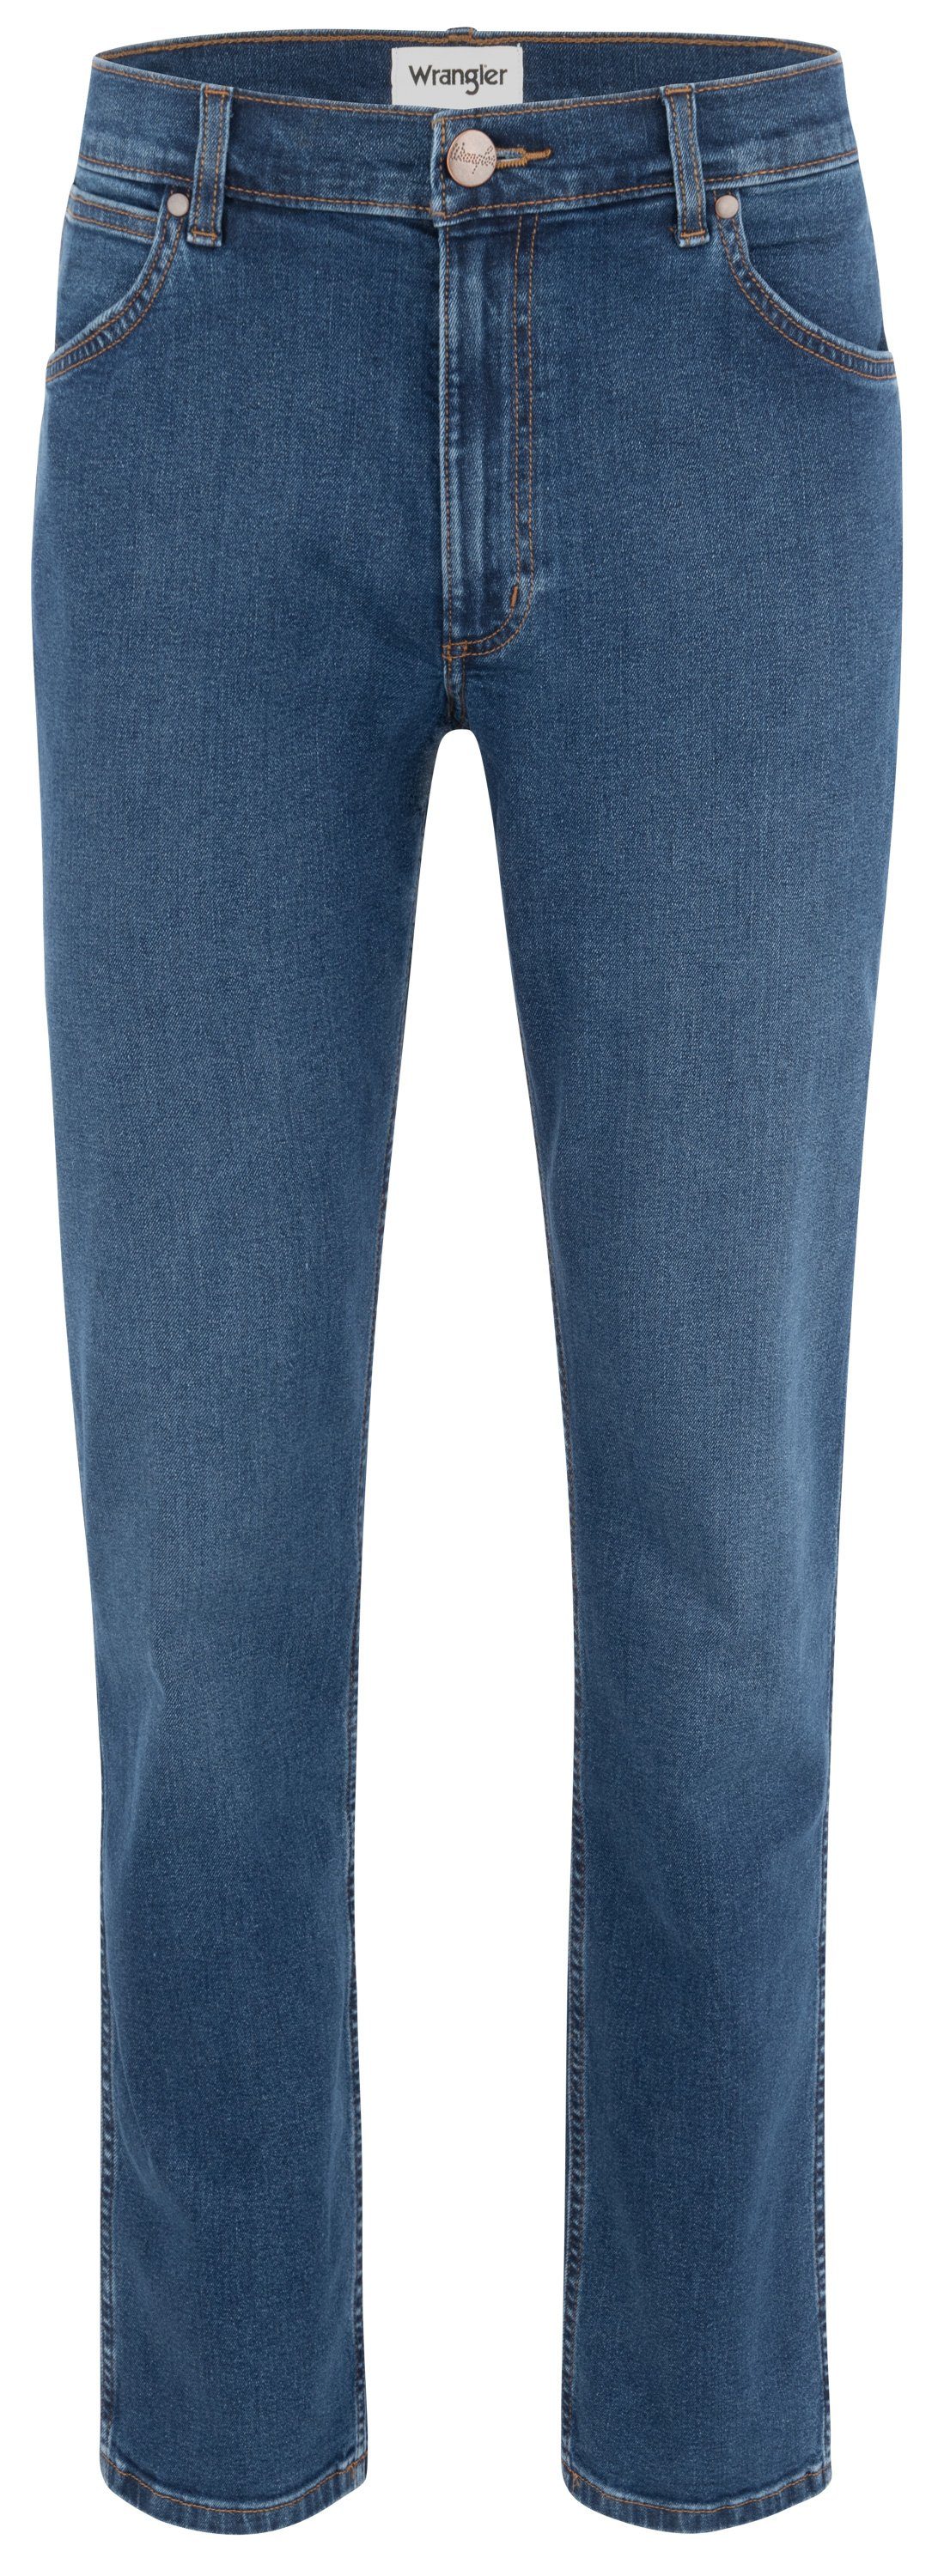 Wrangler 5-Pocket-Jeans WRANGLER GREENSBORO far gone W15QOAR21